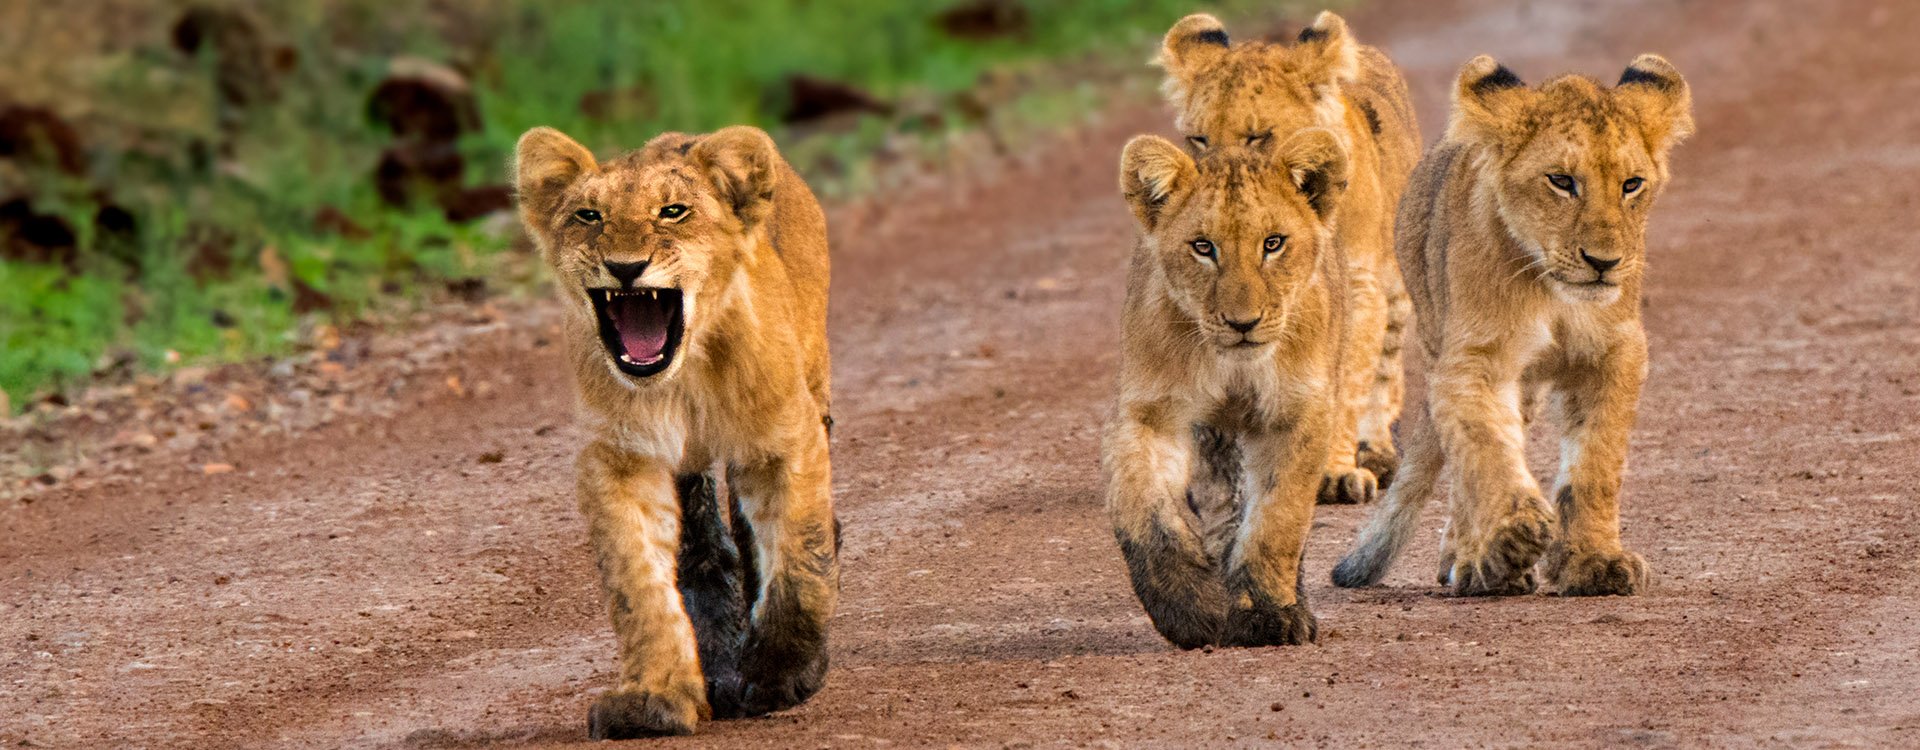 4 lion cubs  strolling in Kenya's Maasai Mara National Park.